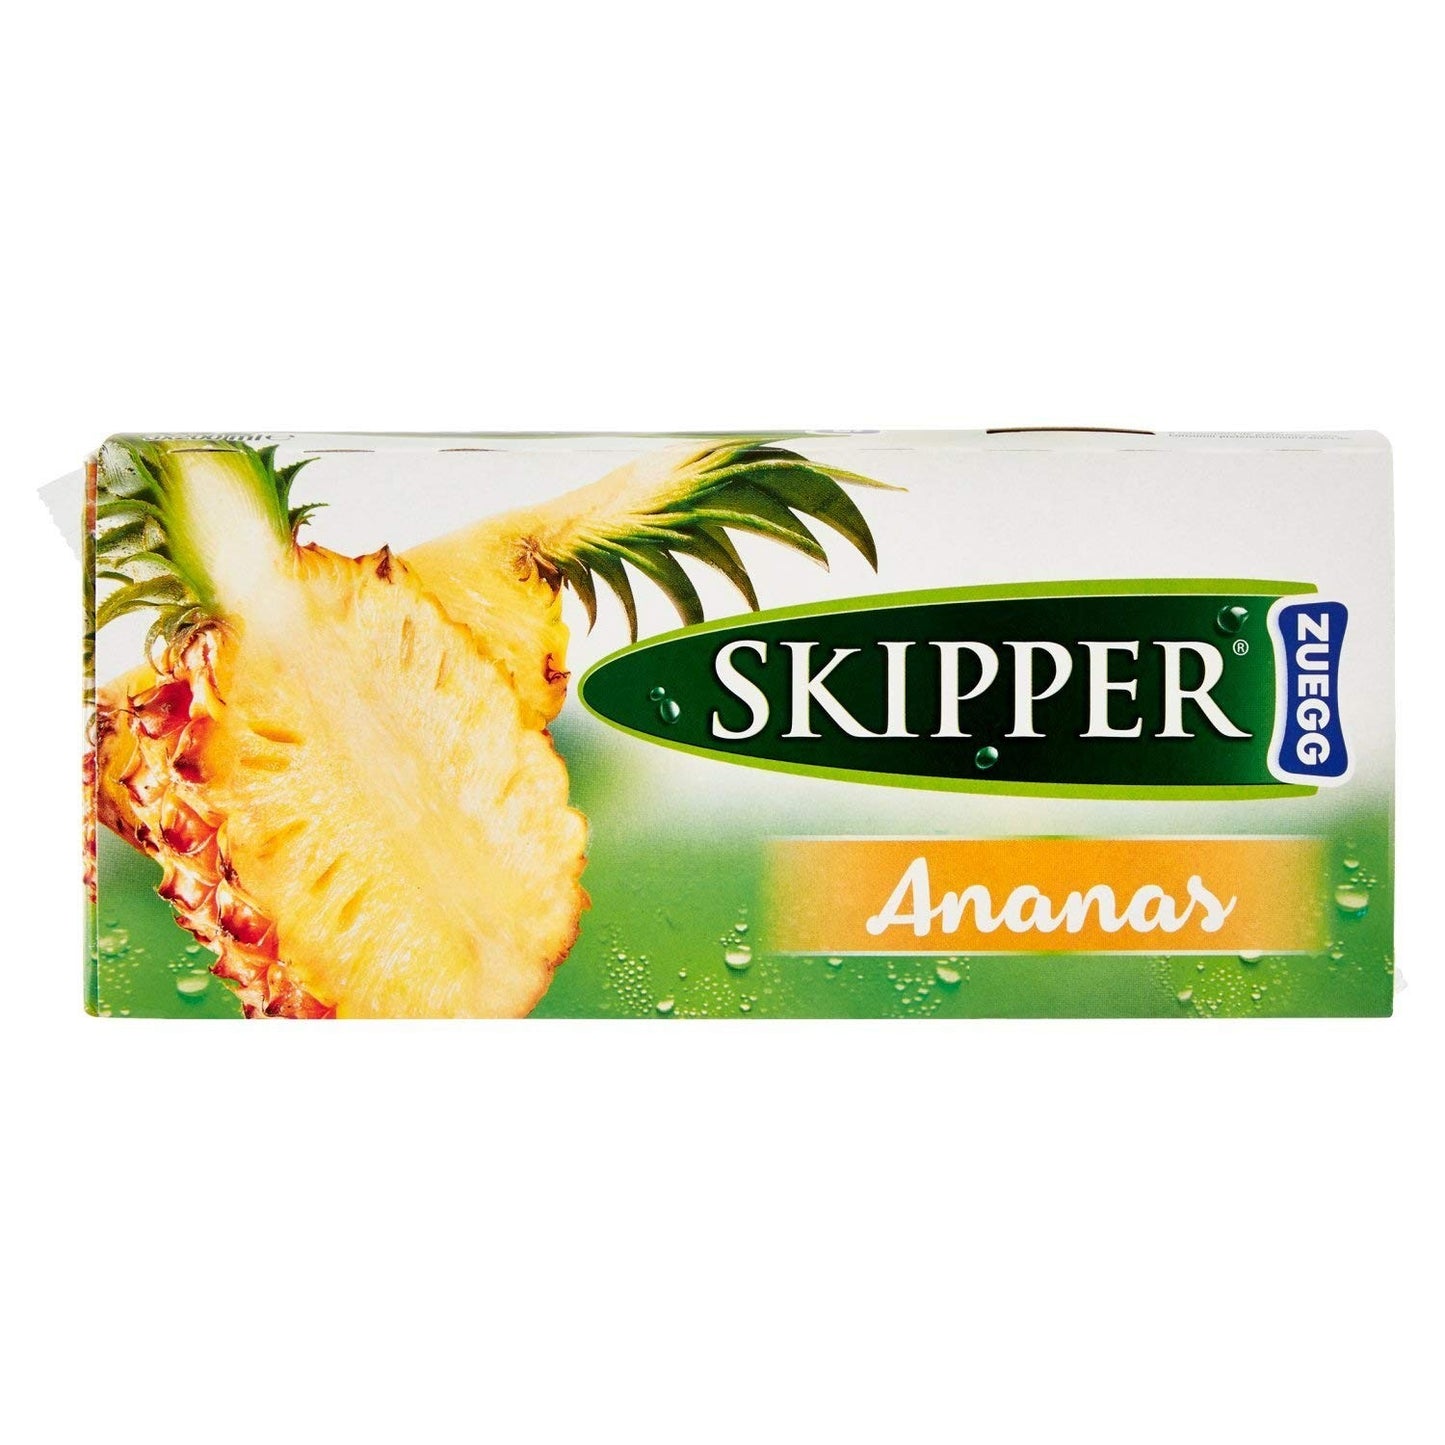 Skipper - Bevanda all'Ananas, 3 x 200 ml - 600 ml